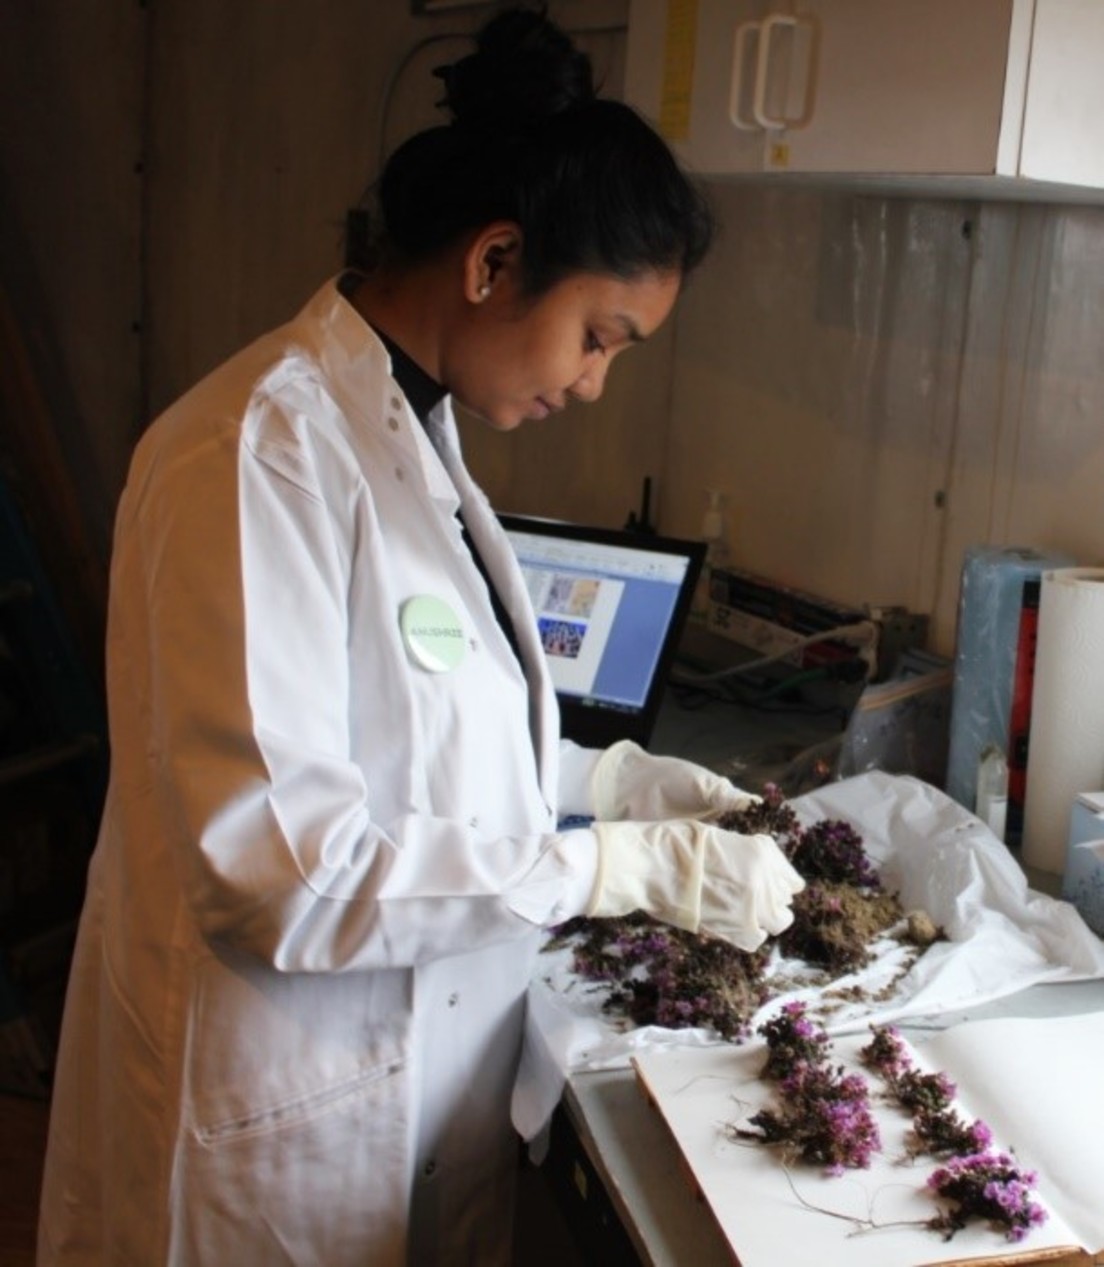 Anushree Srivastava looking at samples in the lab. (Mars Society)